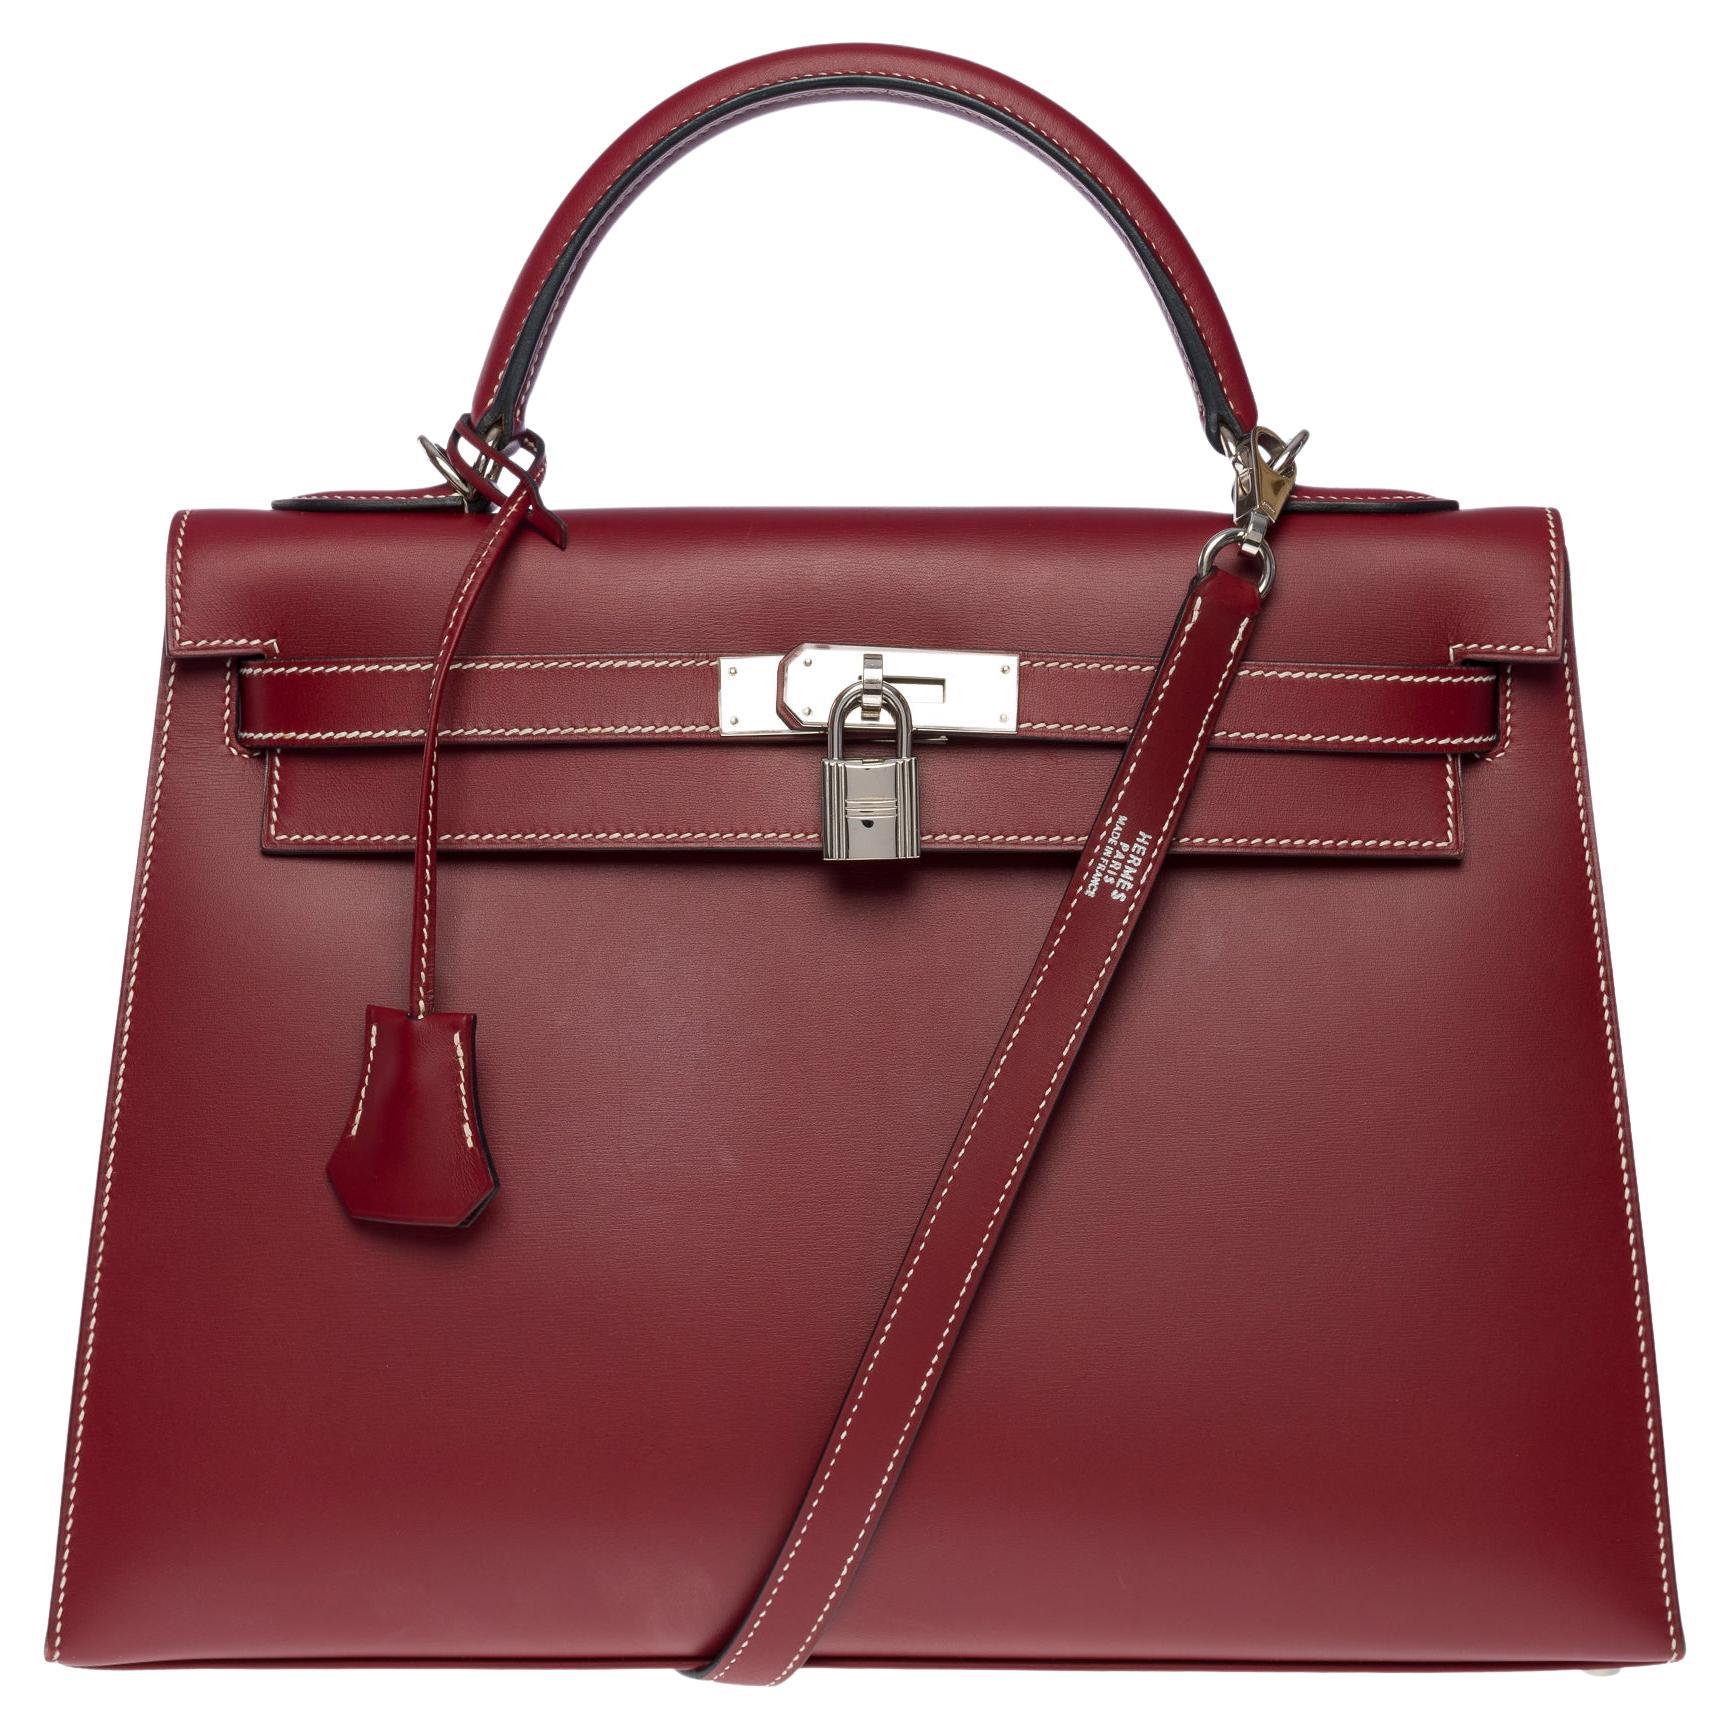 Very Rare Hermès Kelly 32 sellier handbag strap in Rouge H Chamonix leather, SHW